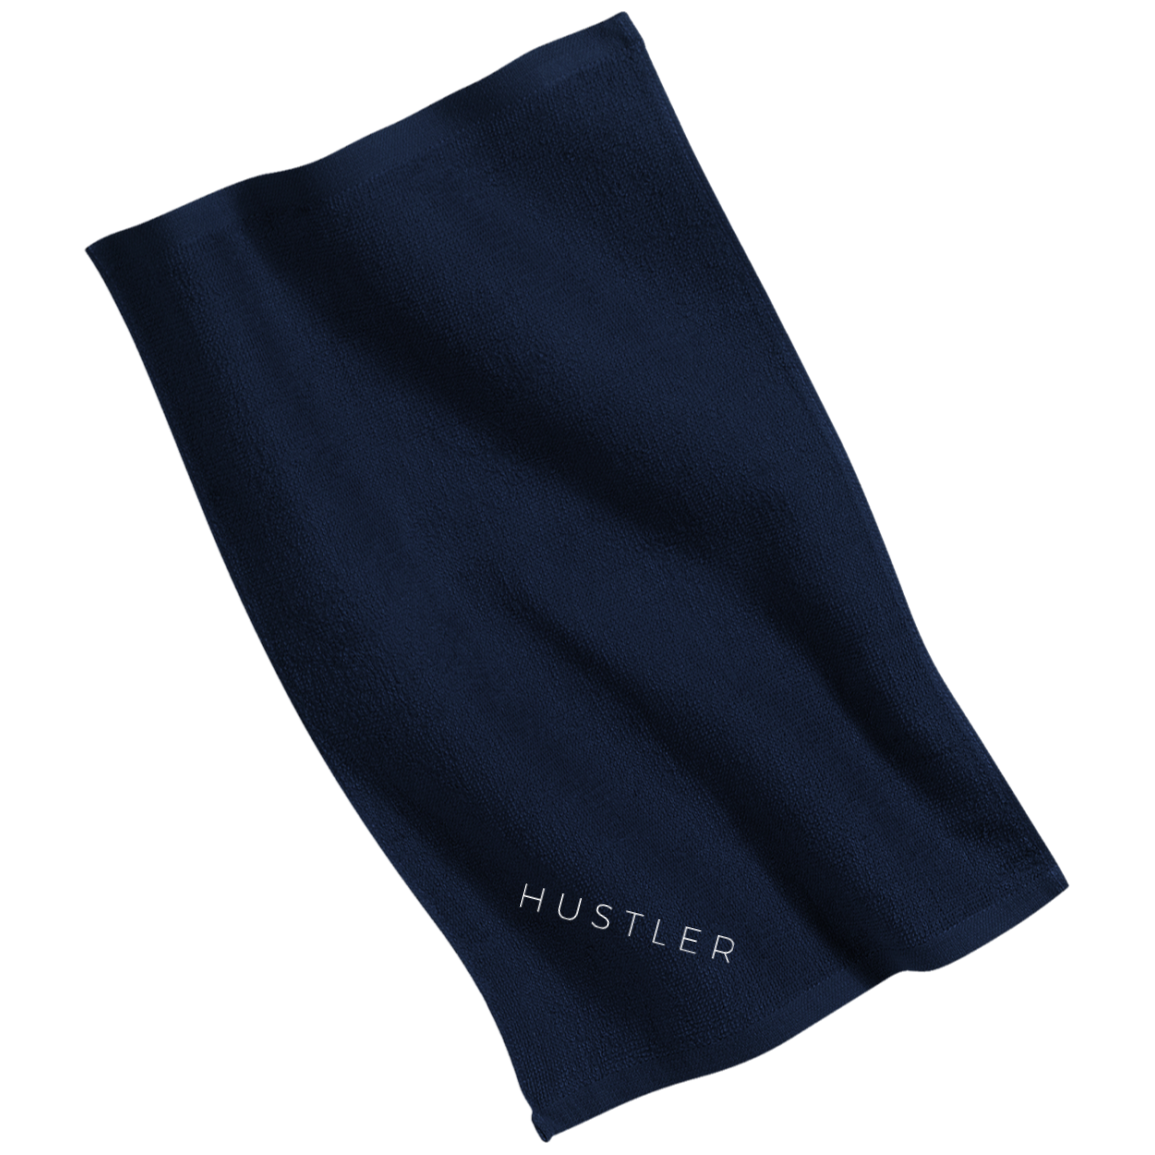 HUSTLER Embroidery Gym Towel